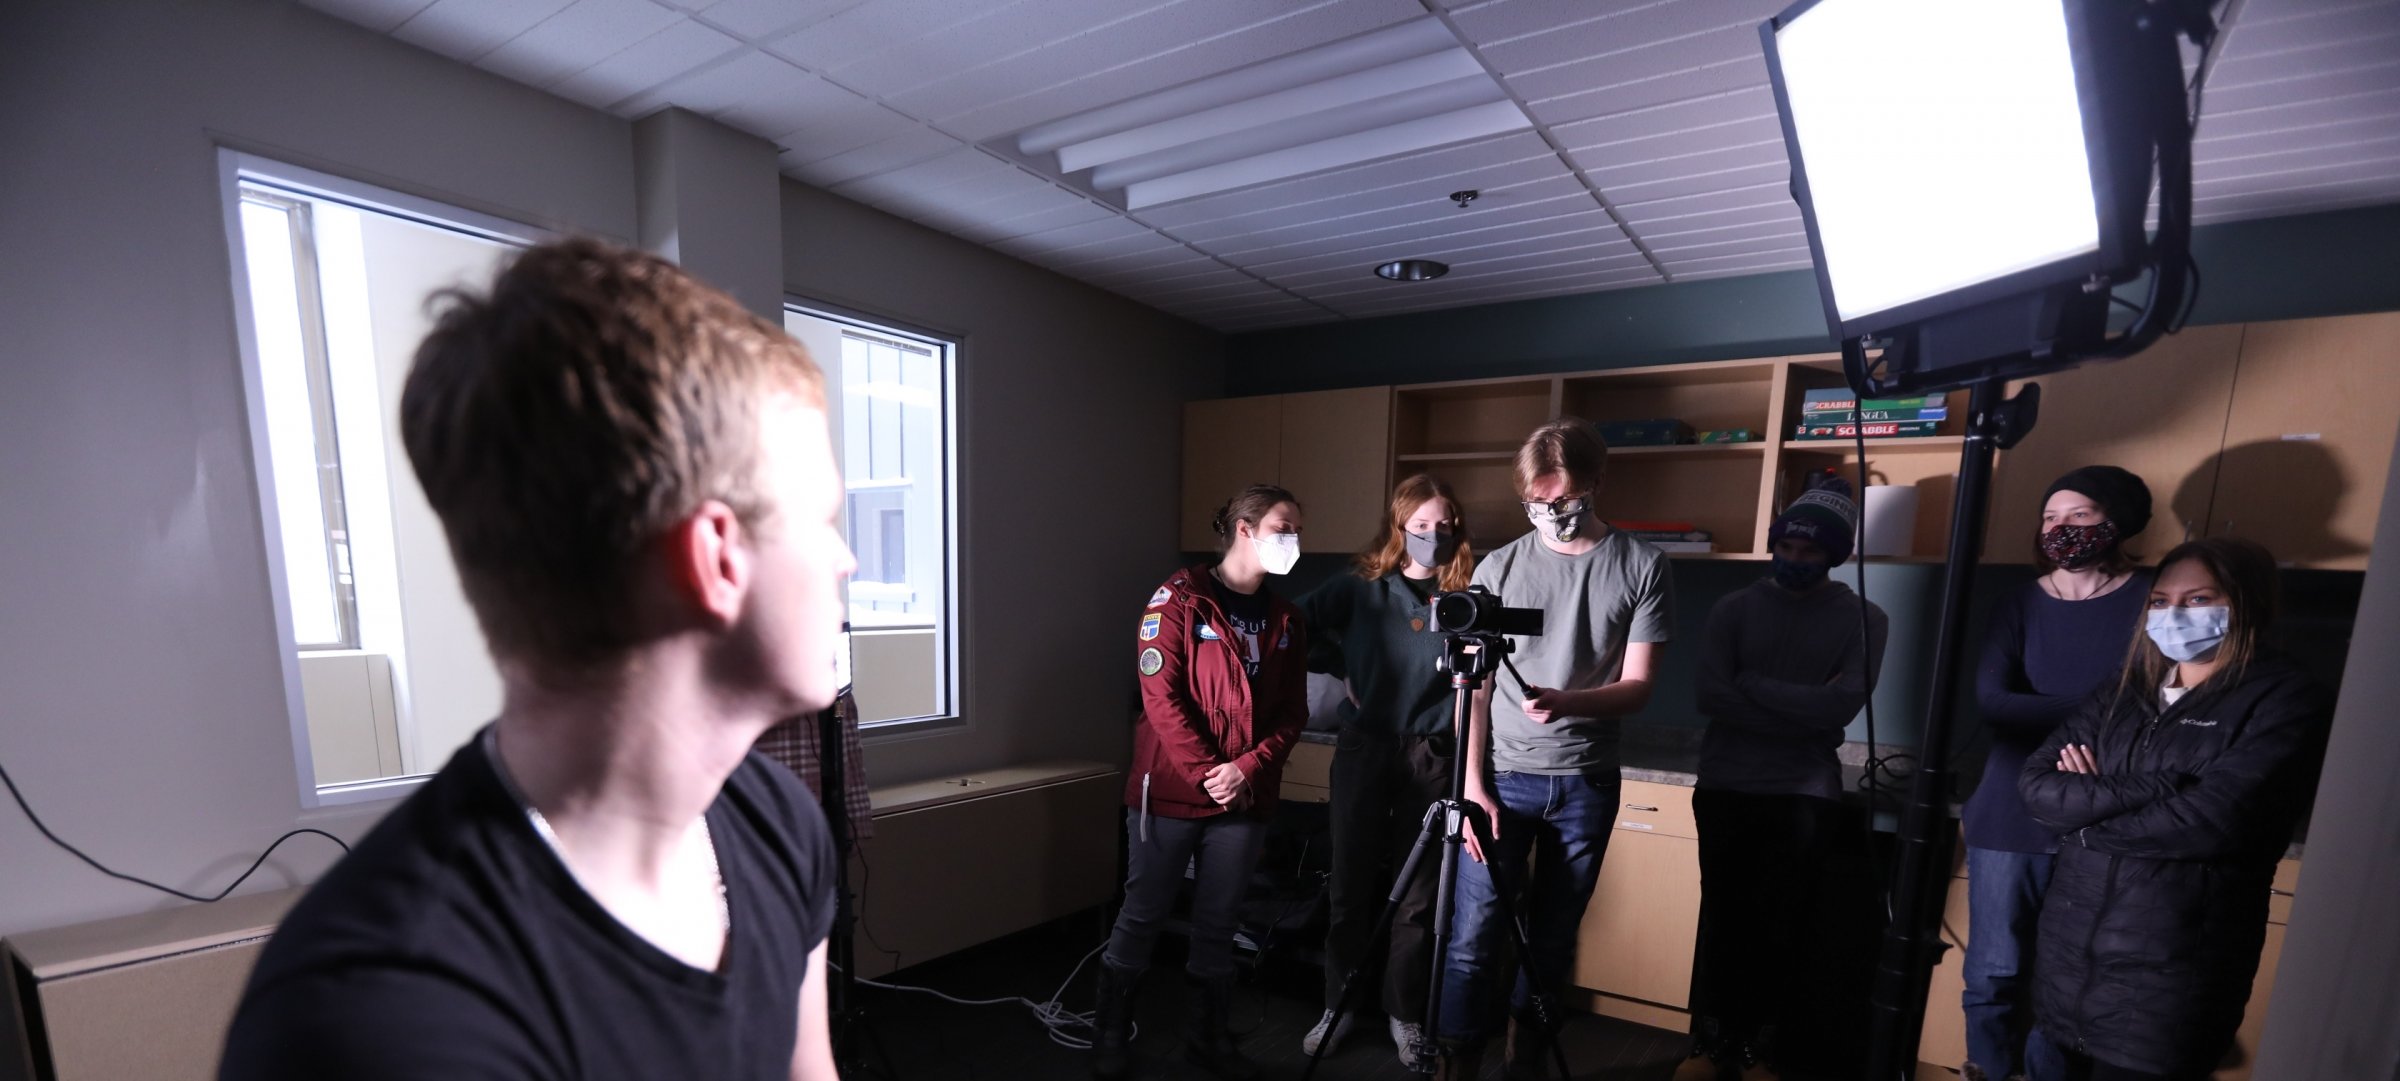 Image of media students preparing a video shoot